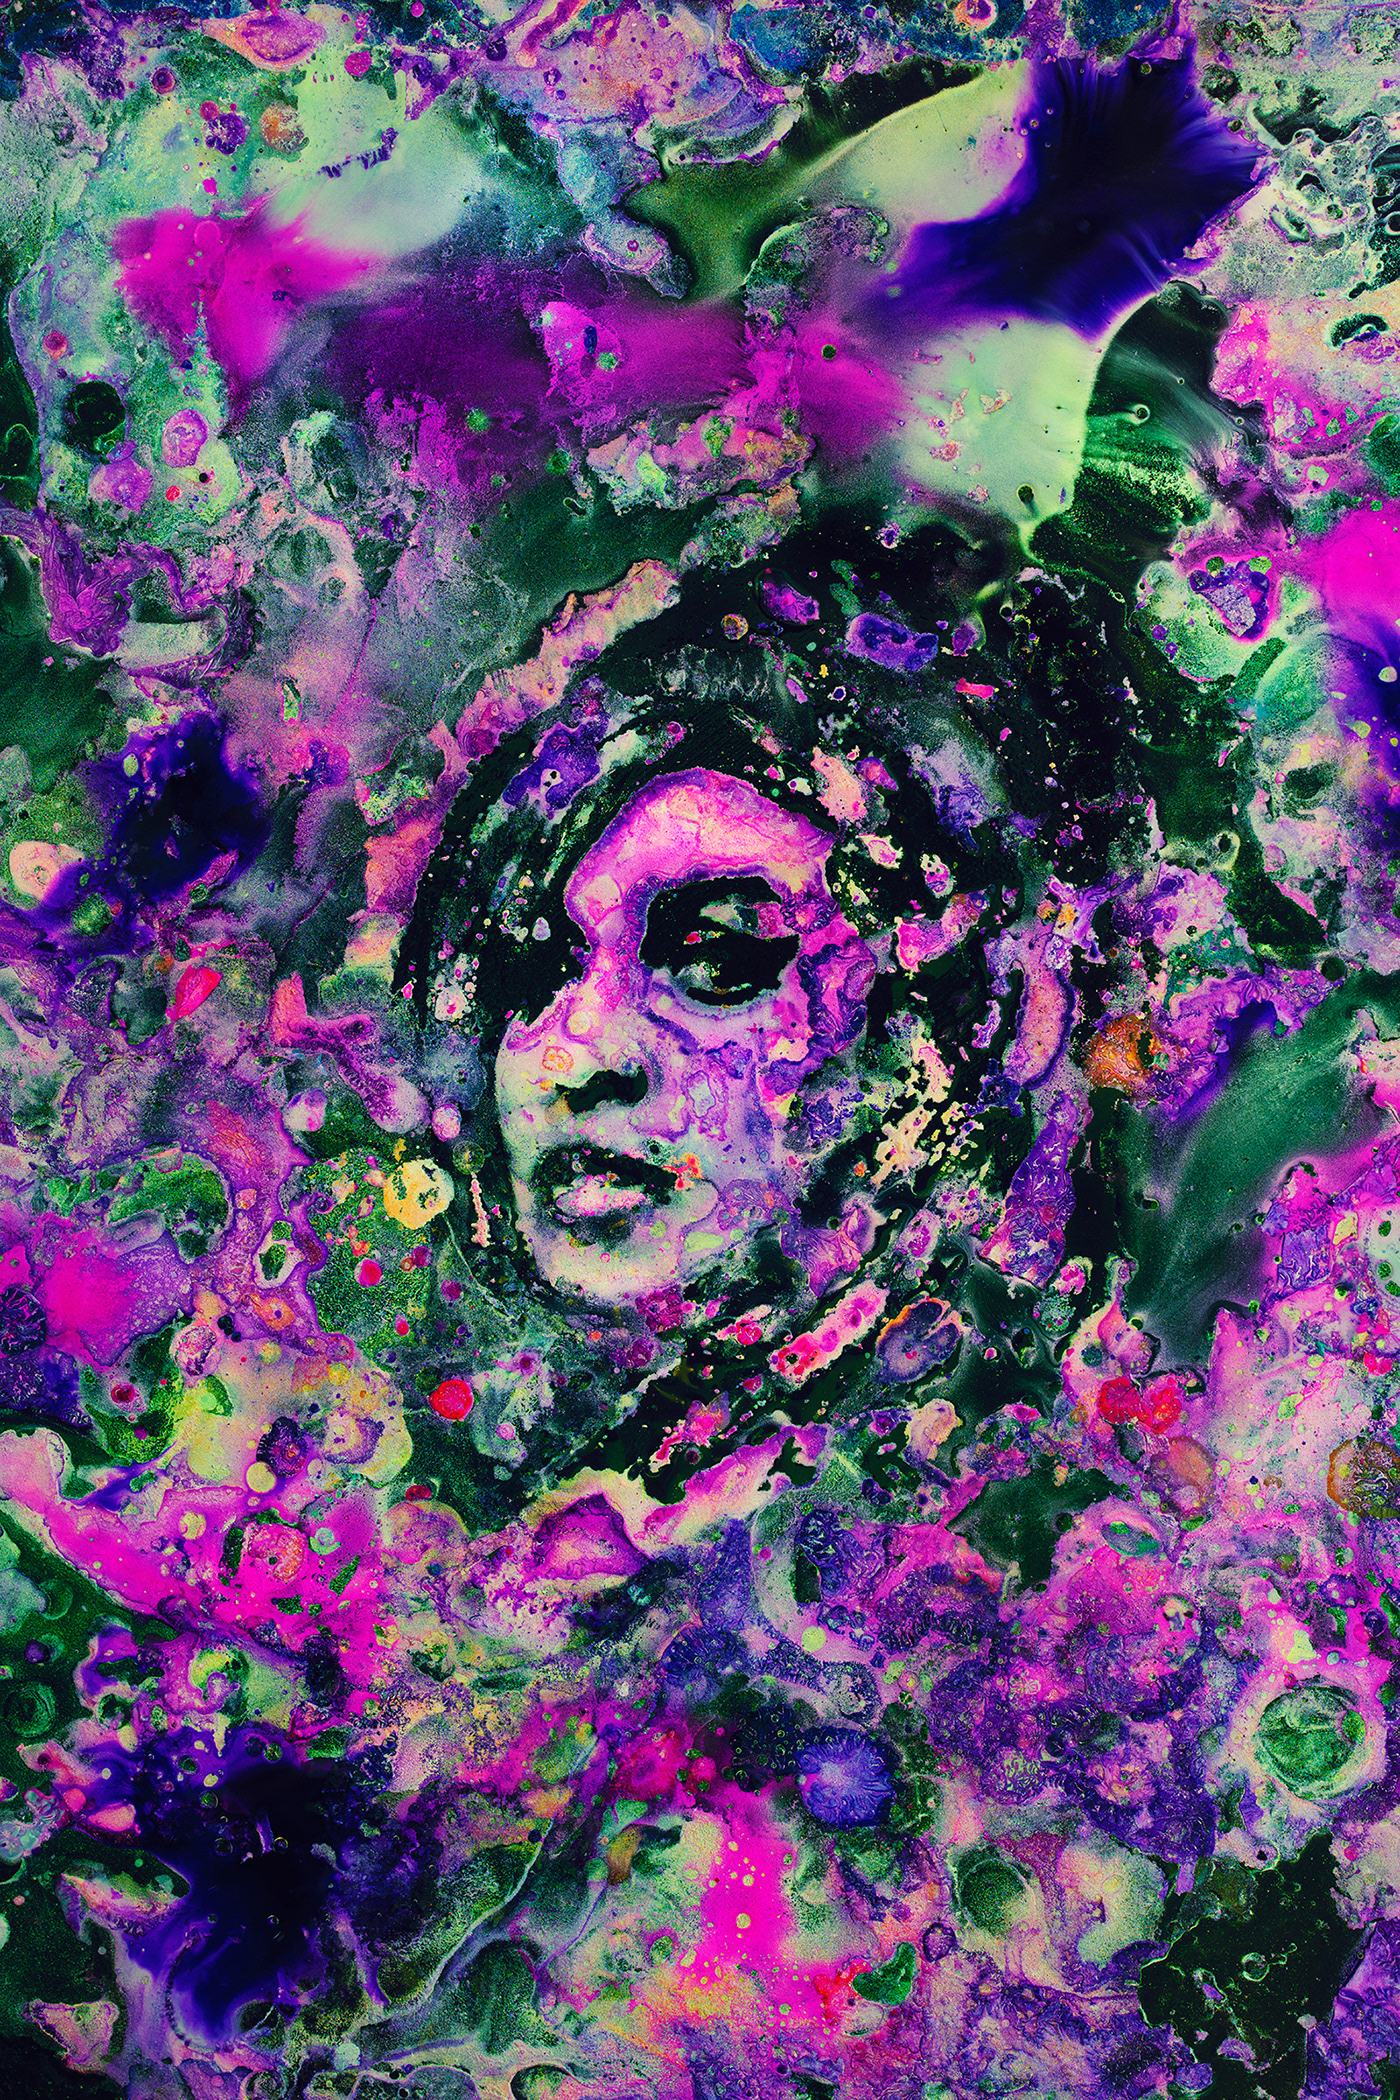 abstract Adele colorful eminem Fluid Art portrait Liquid paint texture sonyalpha